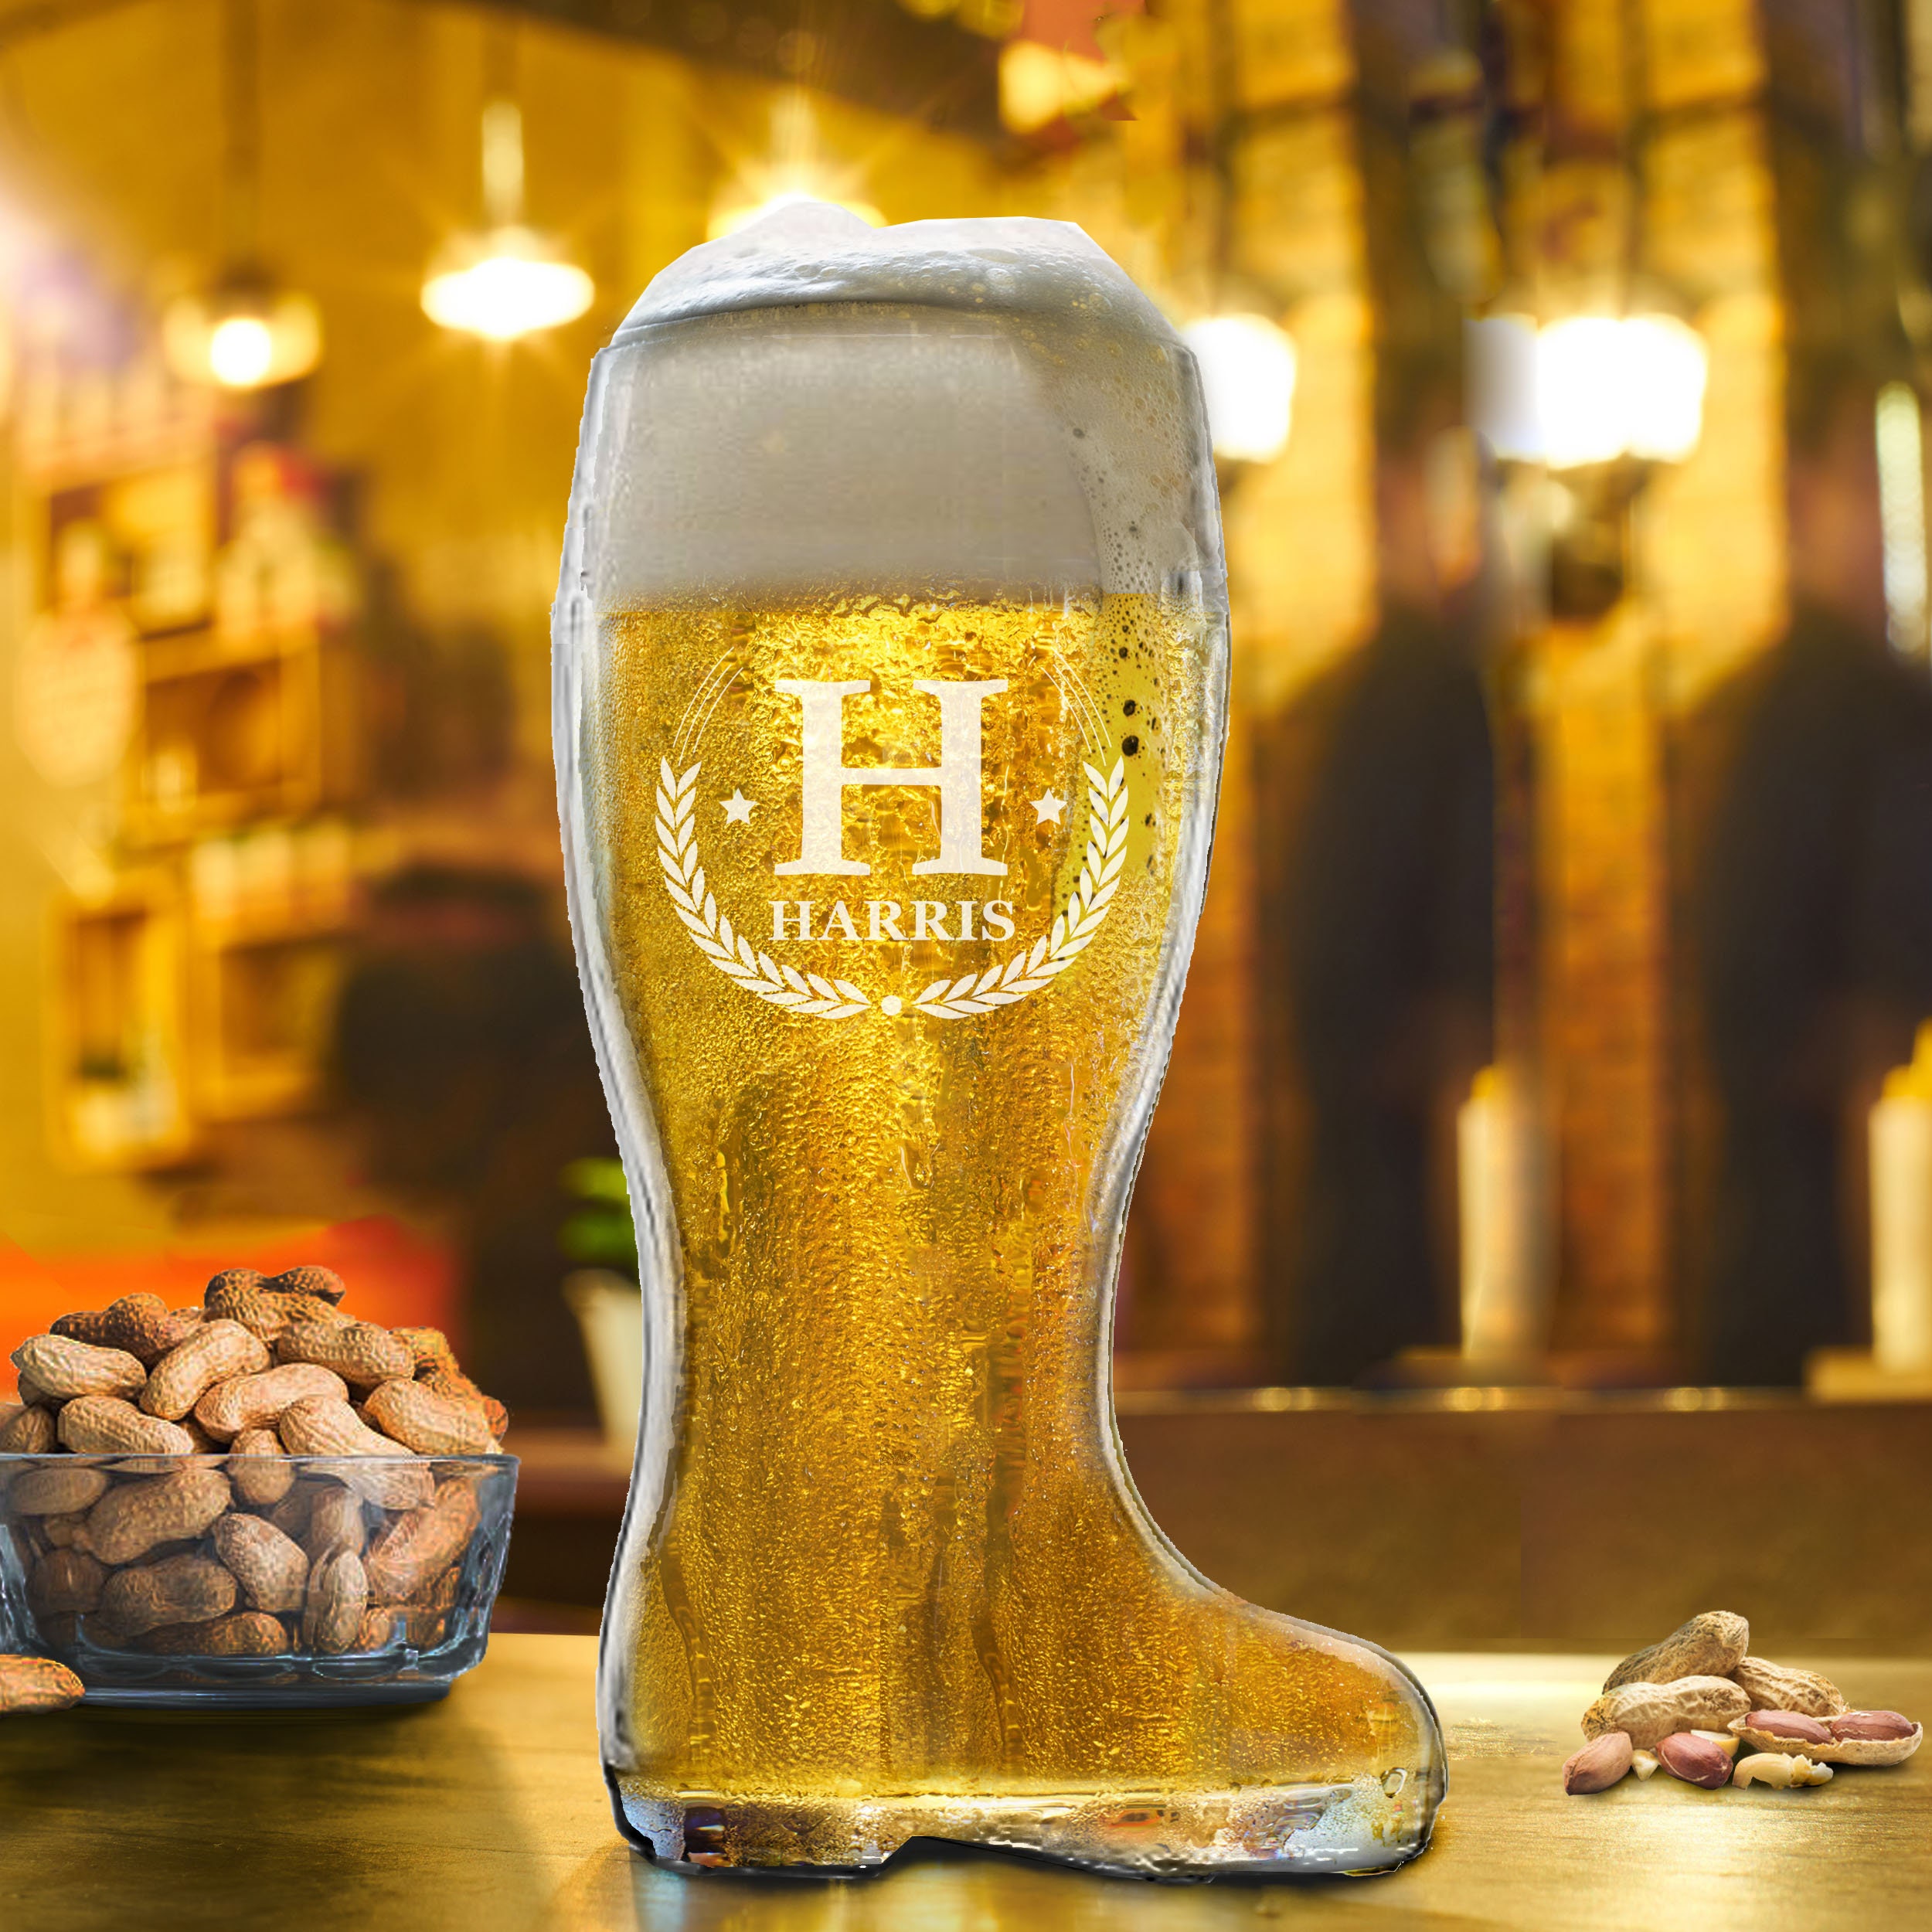 Pint Glass 'Beer Glasses of Deutschland' - German Beer Mugs, Boots